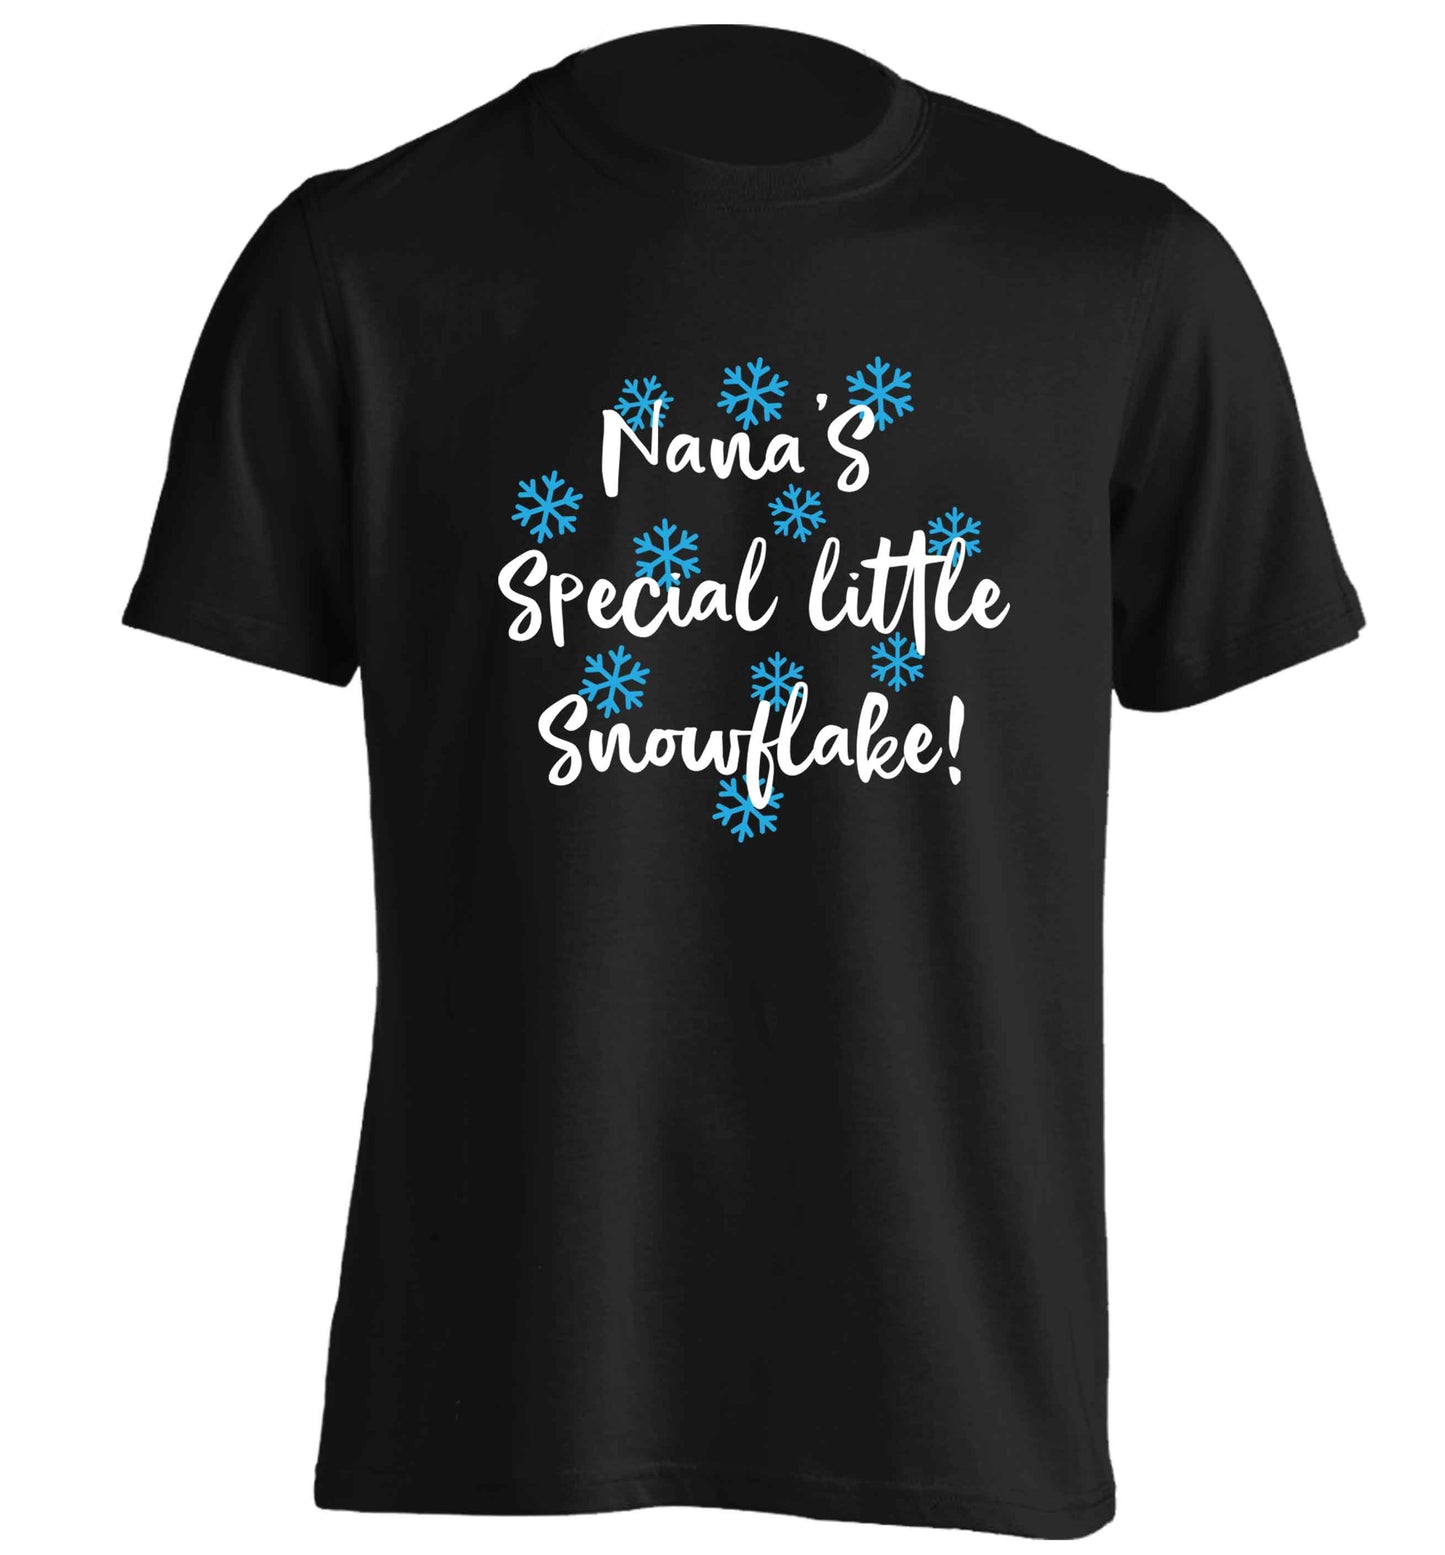 Nana's special little snowflake adults unisex black Tshirt 2XL